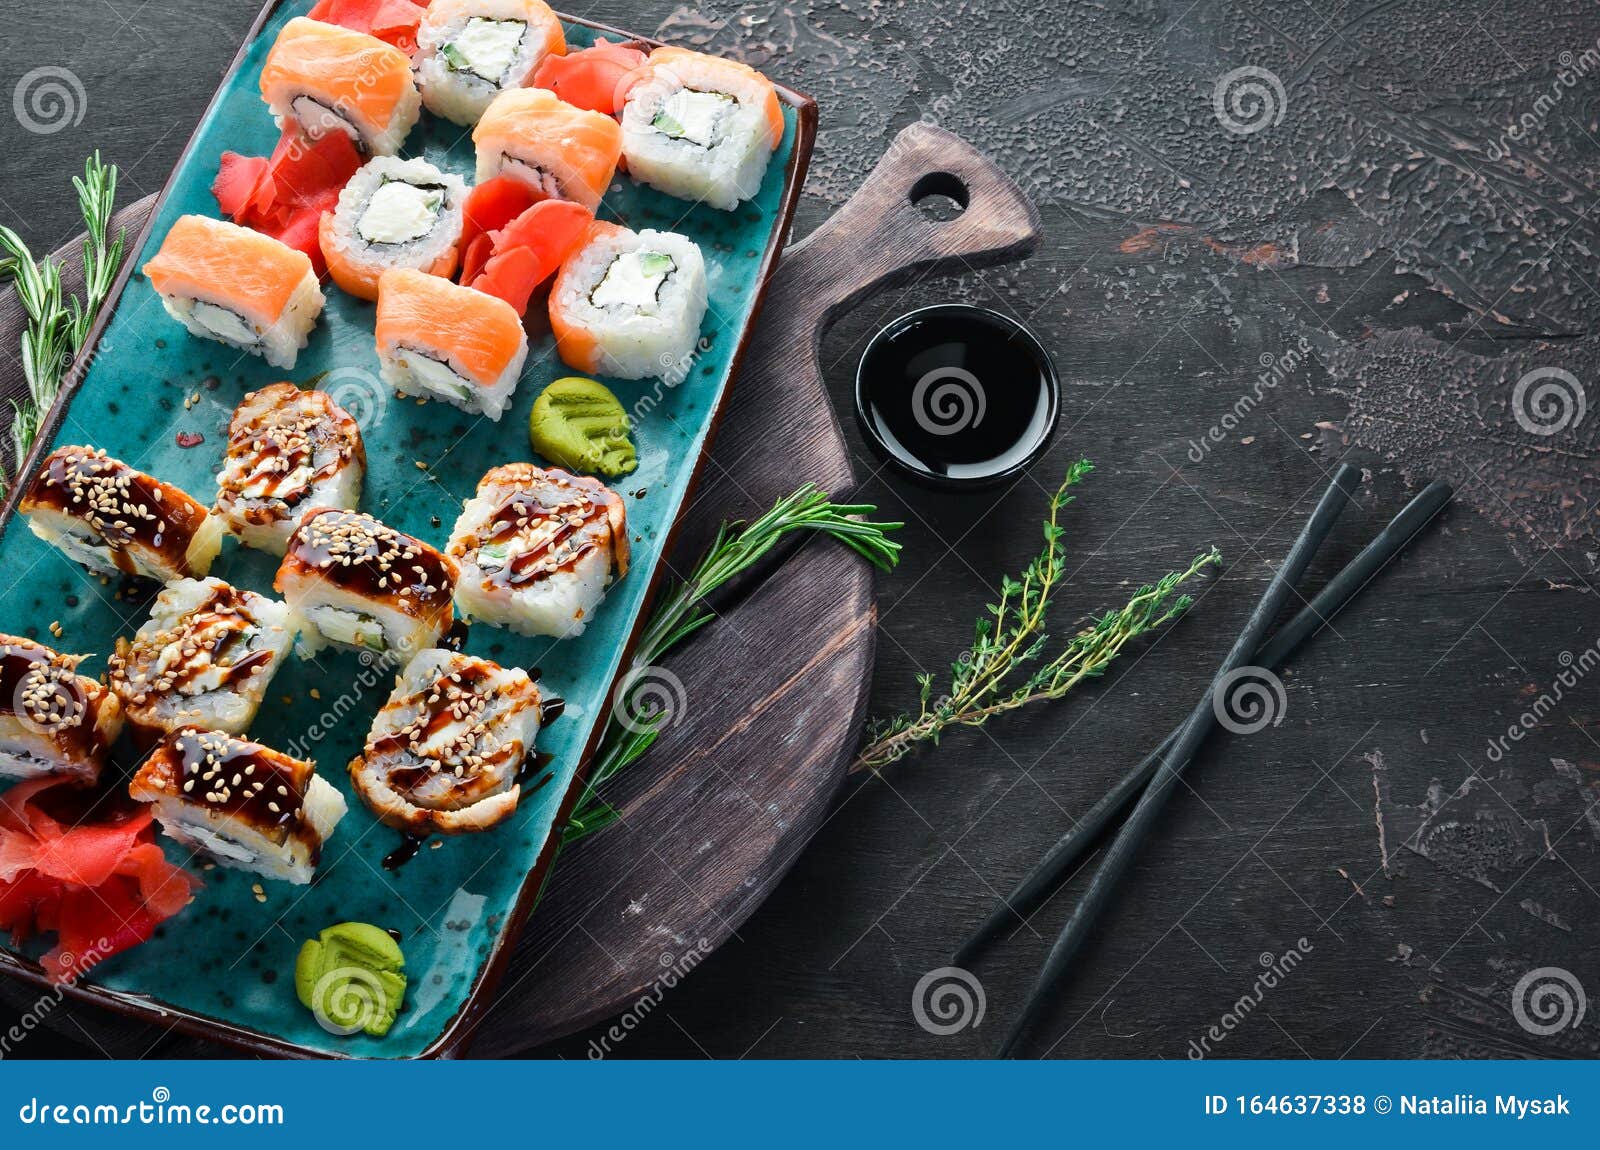 Sushi And Sushi Roll Set Rice Bowls Gunkan Set Tuna Tataki Stock